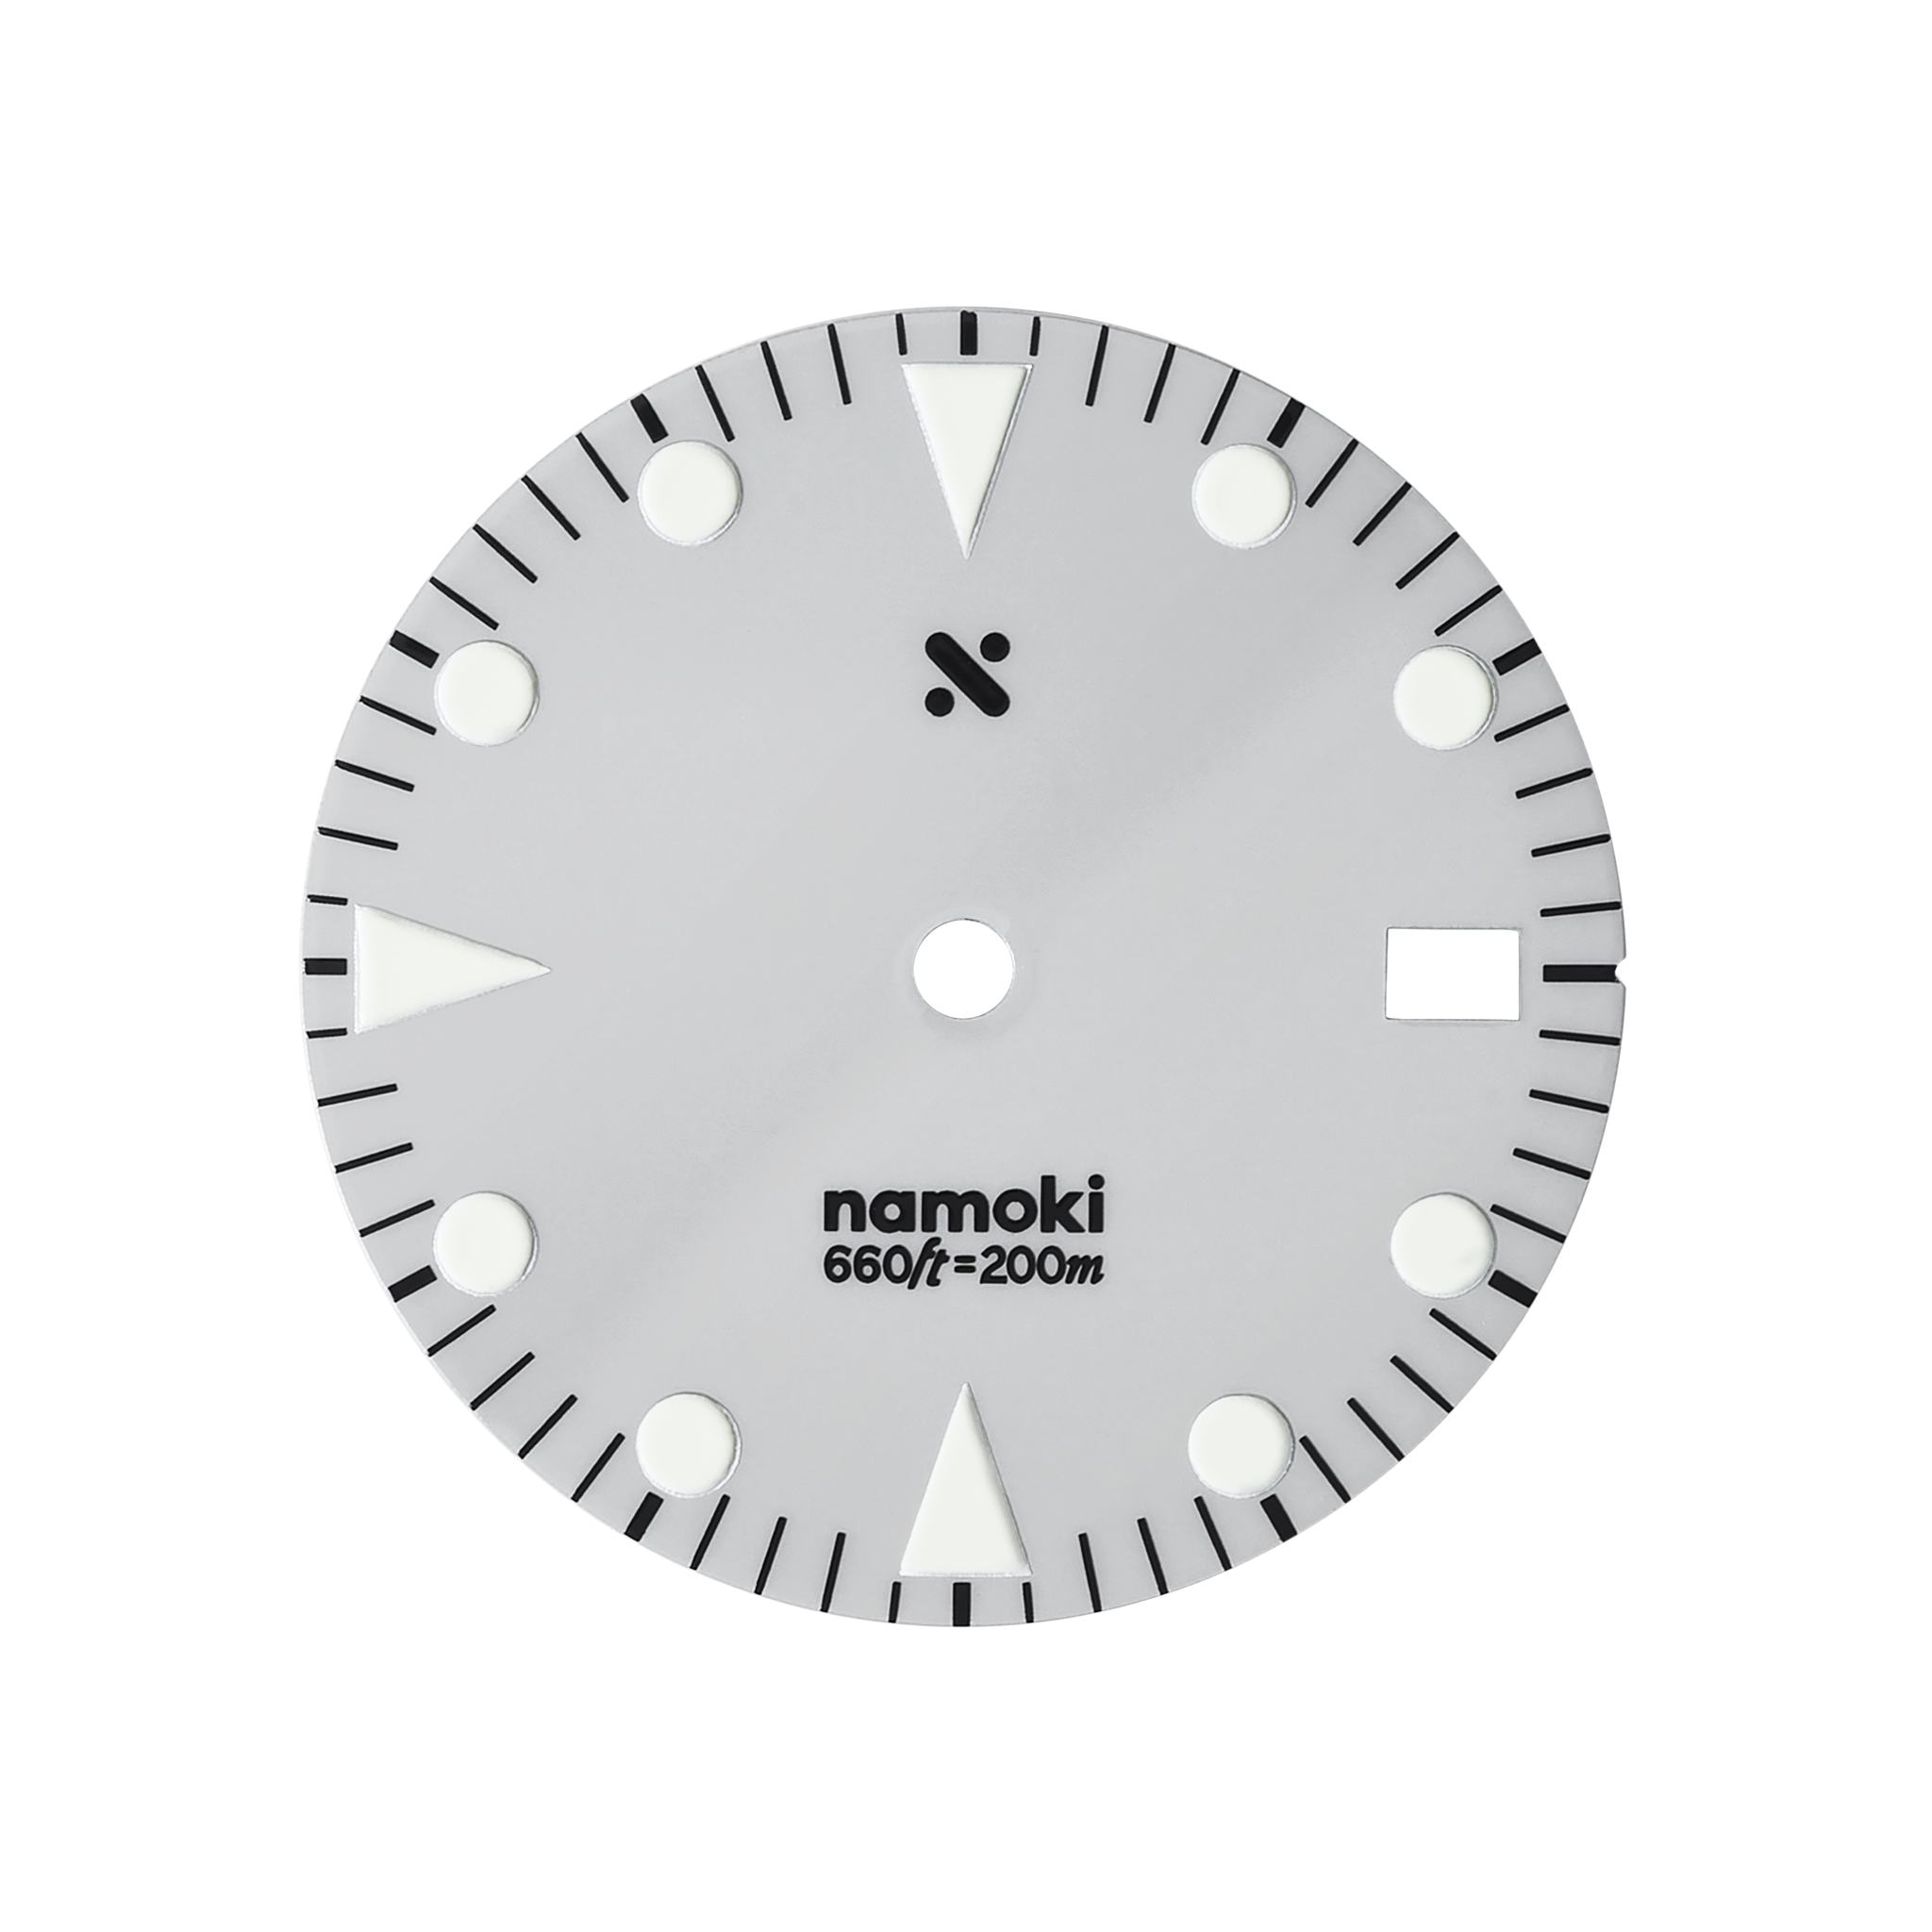 Watch Dial: Tudor Sub Style Enamel Grey with Markers | namokiMODS